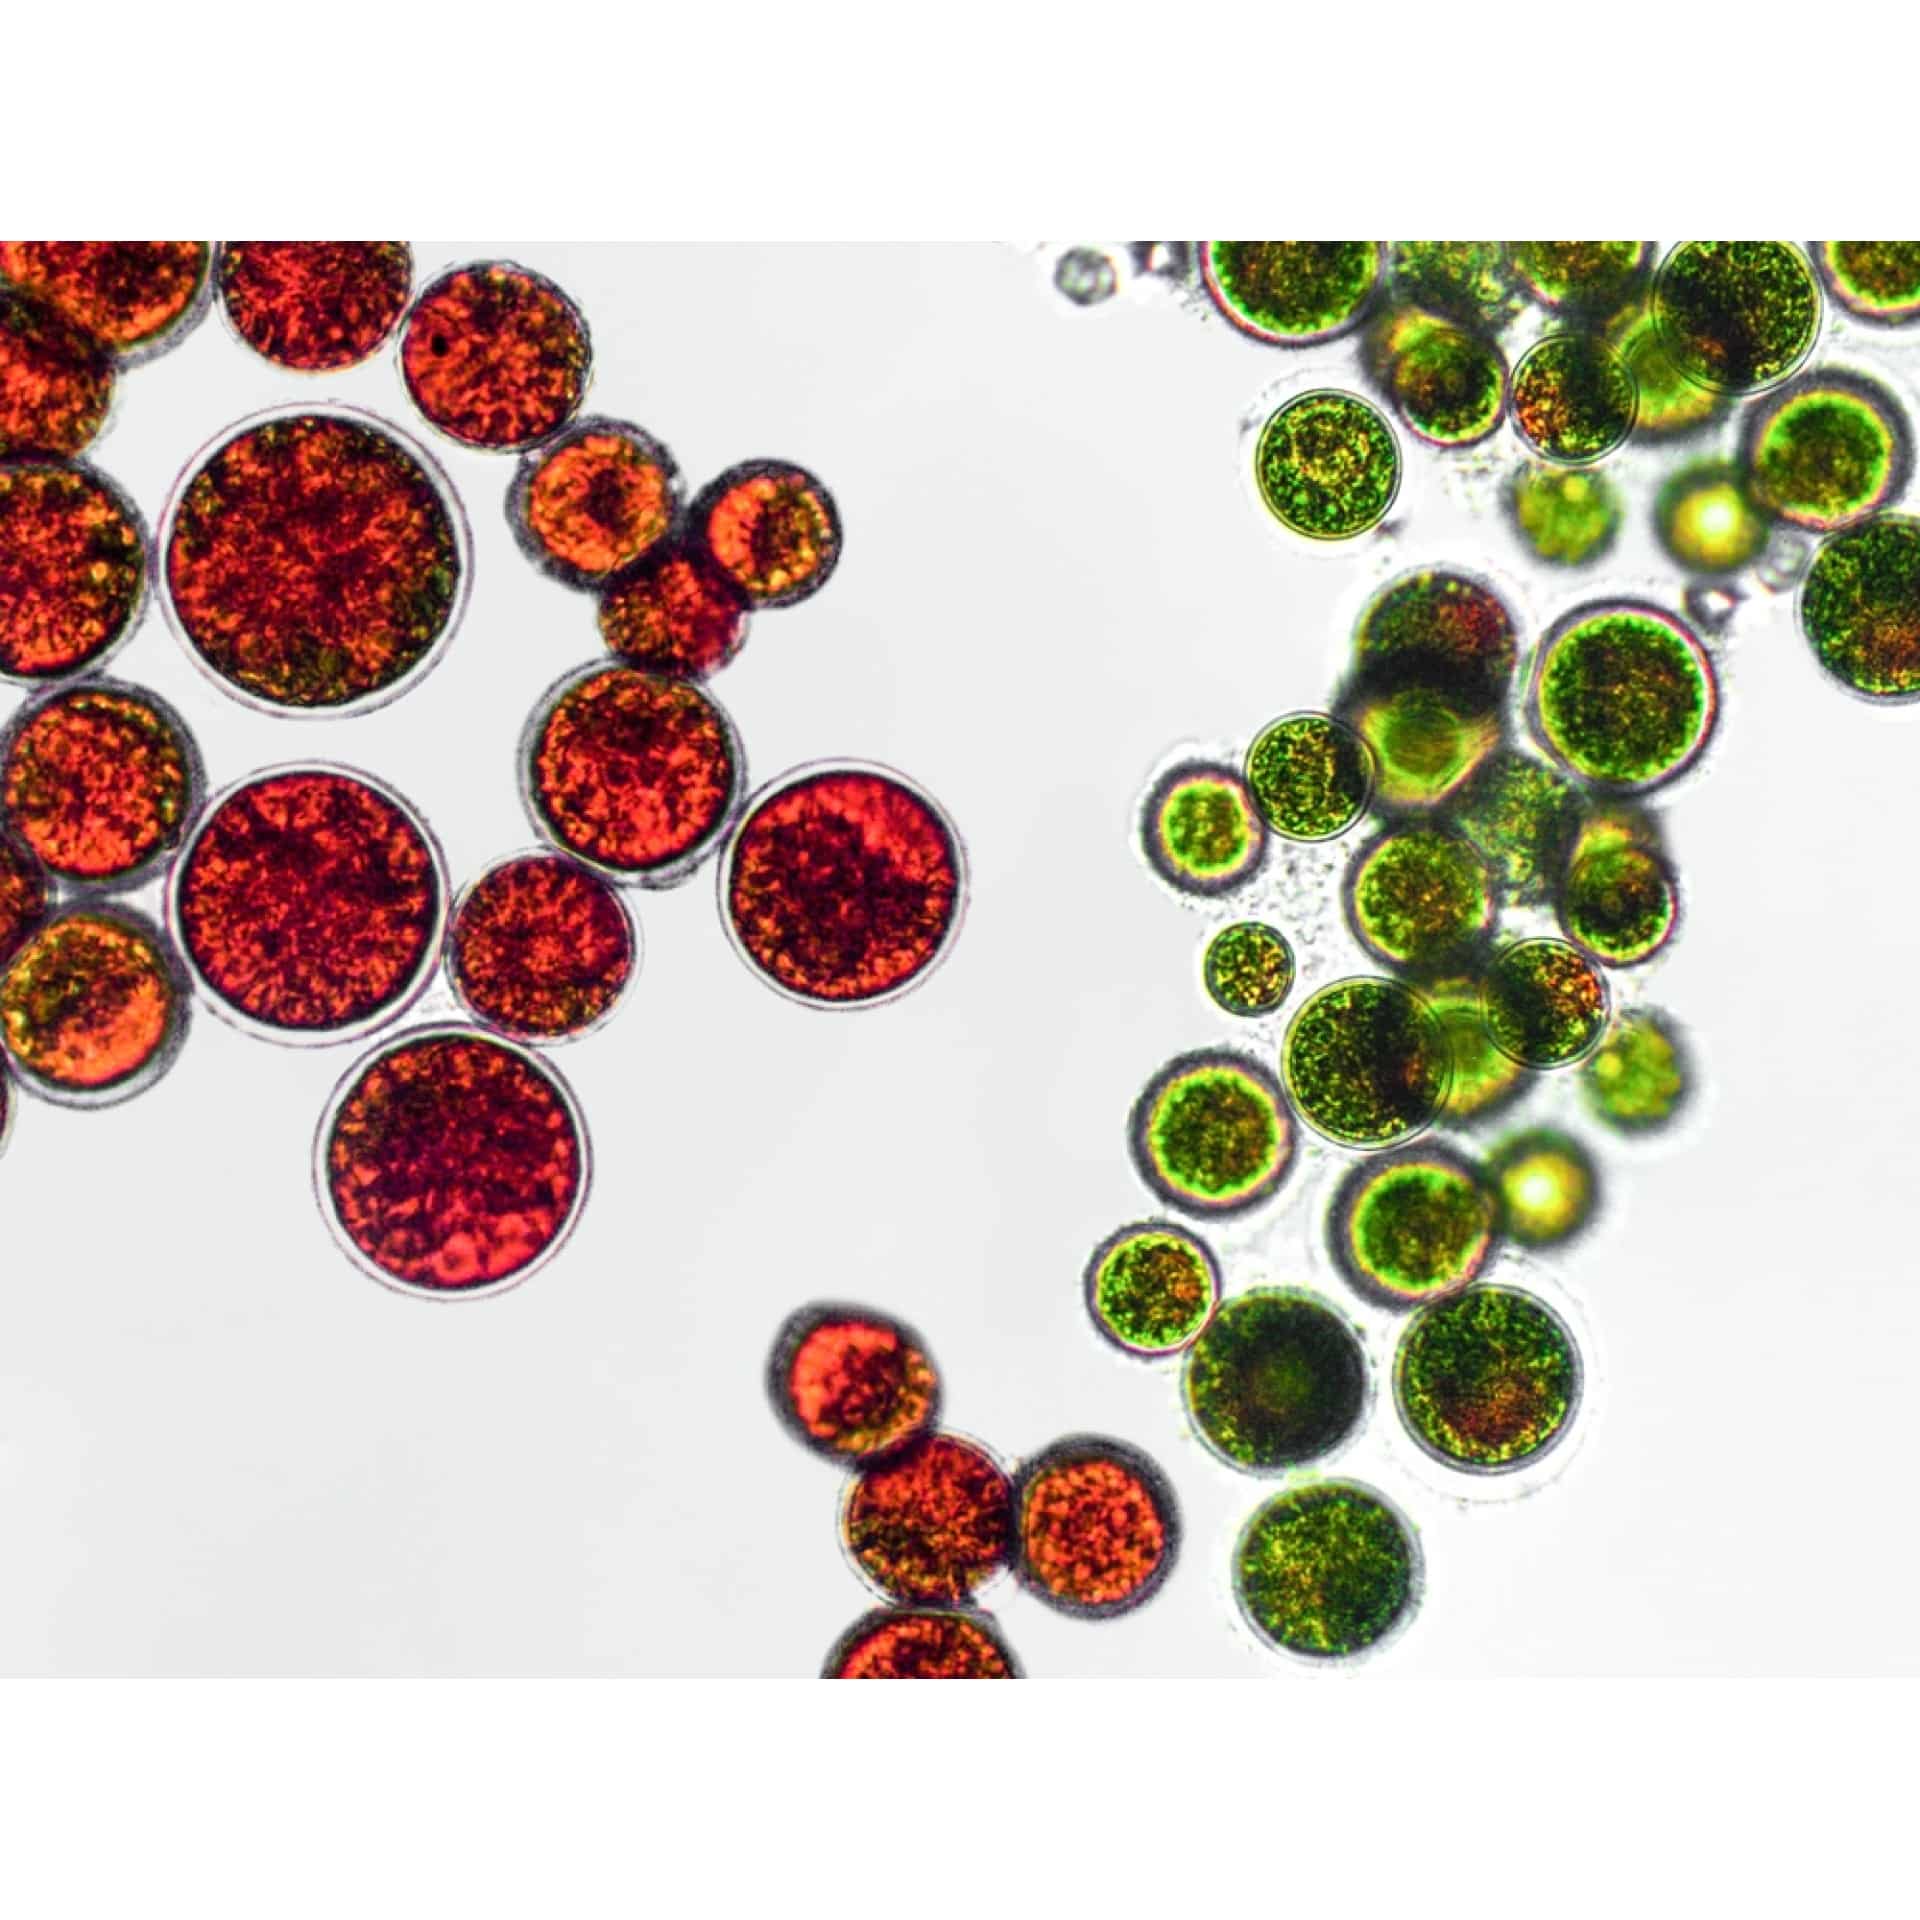 Microalgae in microscopic view